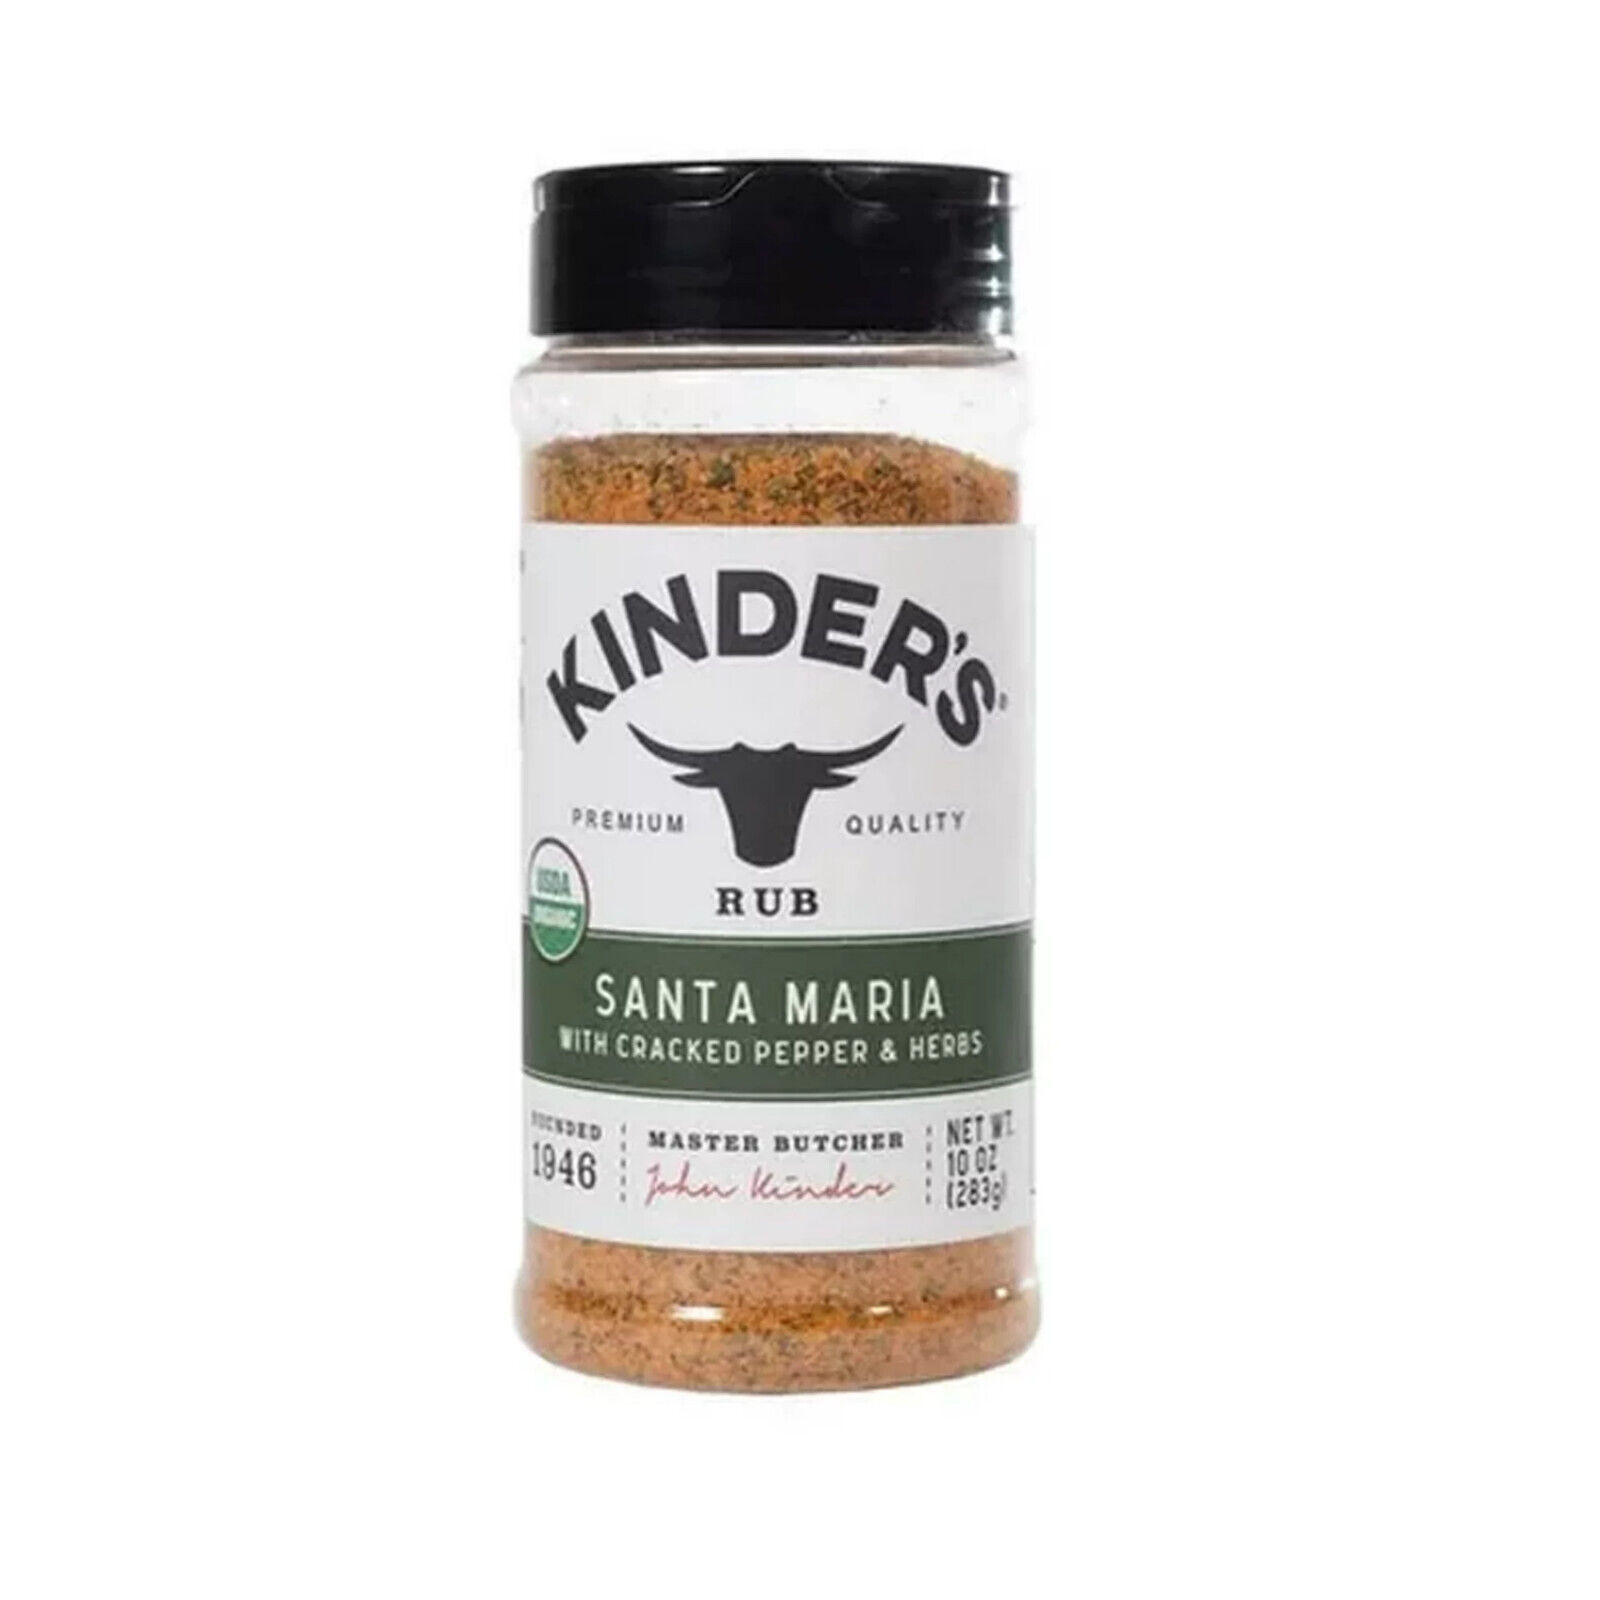 Kinder's Santa Maria w/ Cracked Pepper & Herbs Seasoning Large 10 oz BBQ Spice - $18.31